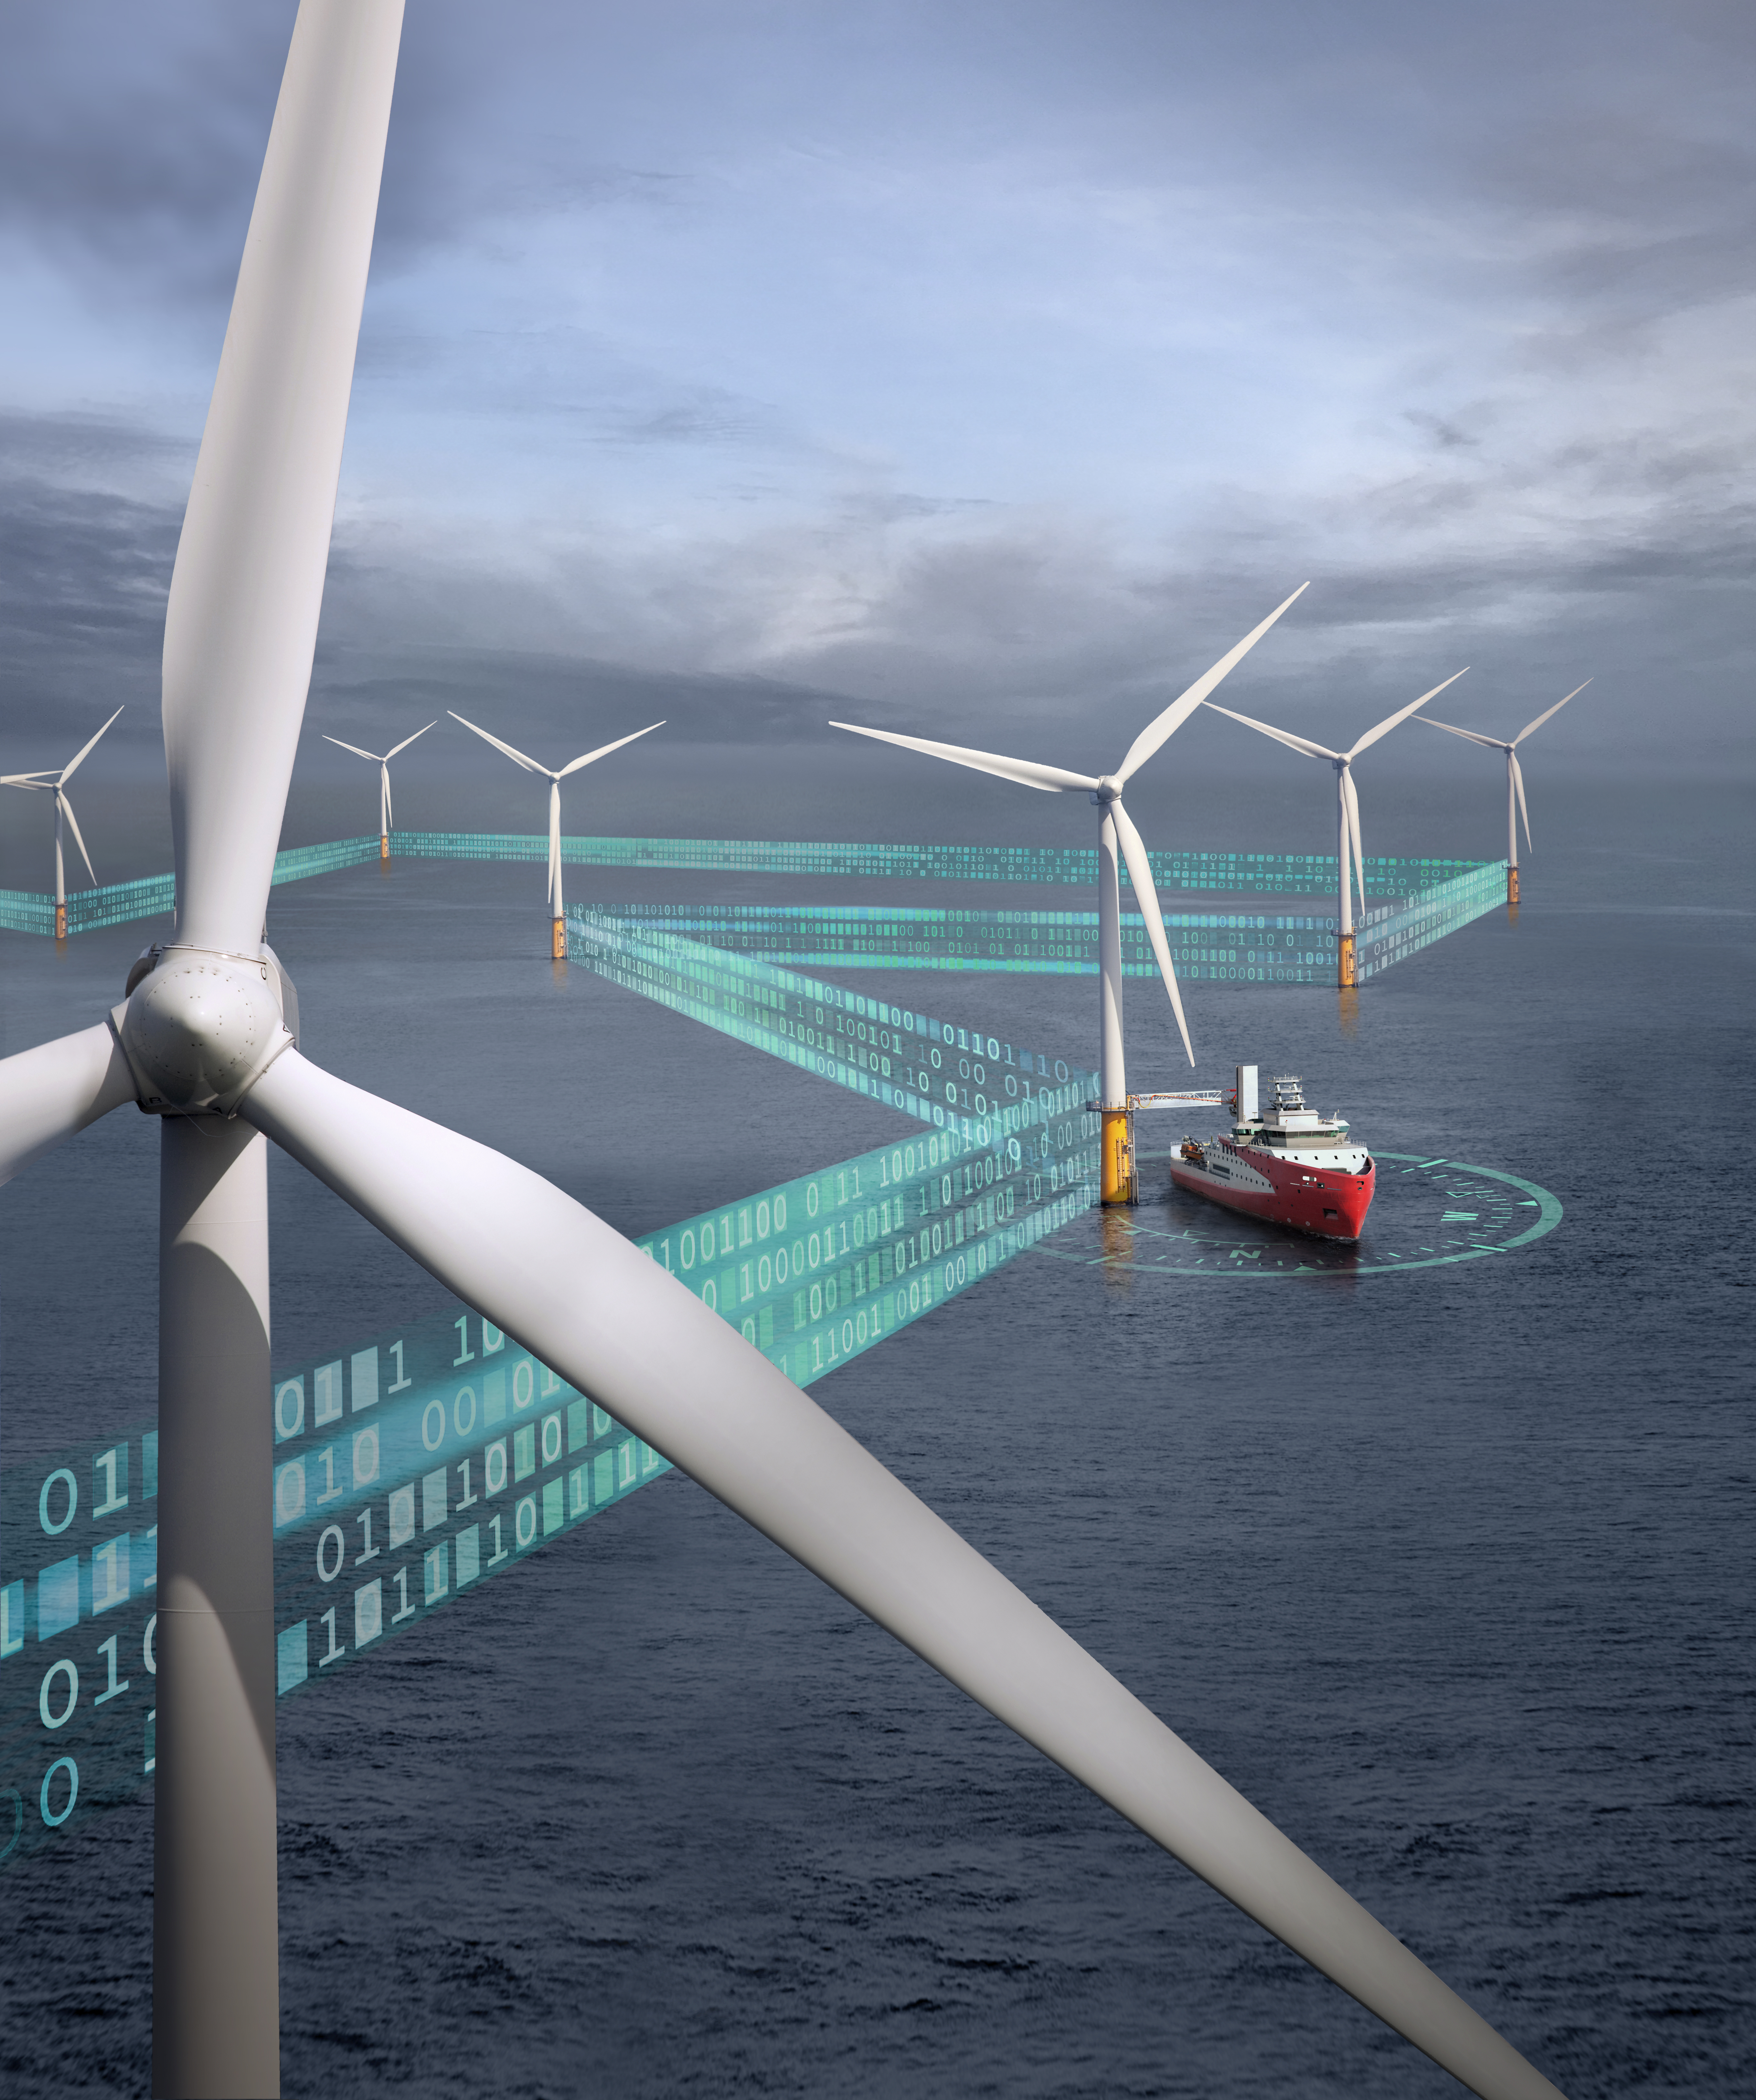 Vessel at sea in windfarm with digital path